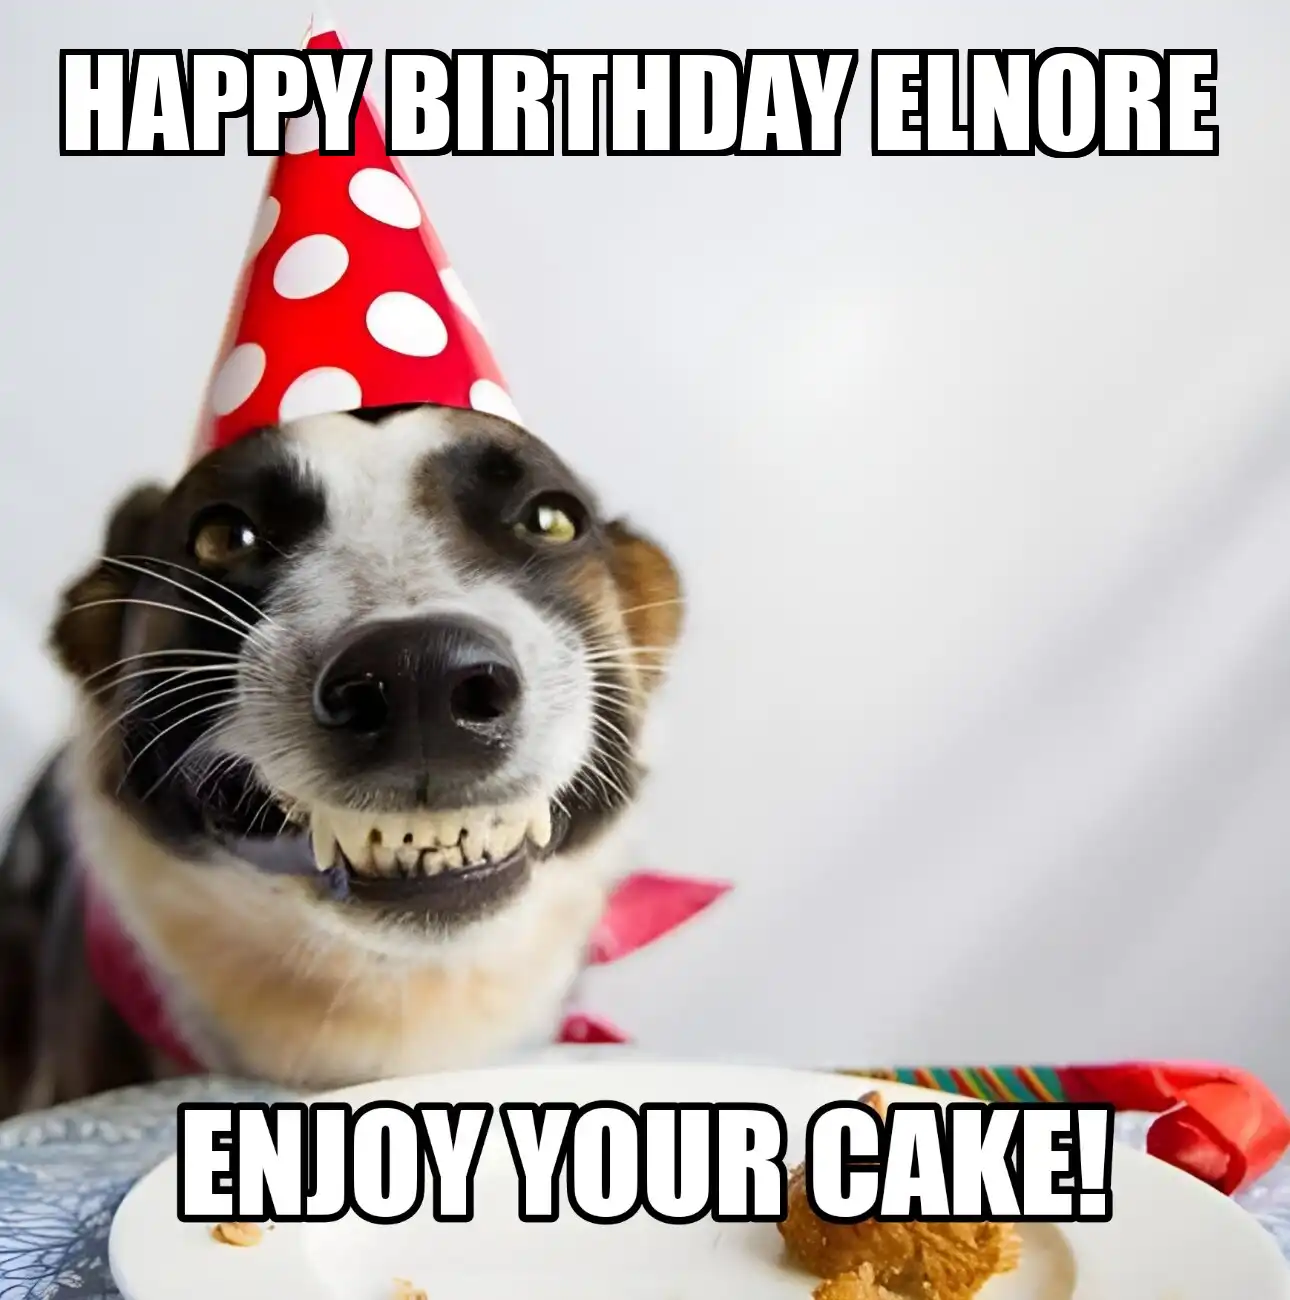 Happy Birthday Elnore Enjoy Your Cake Dog Meme